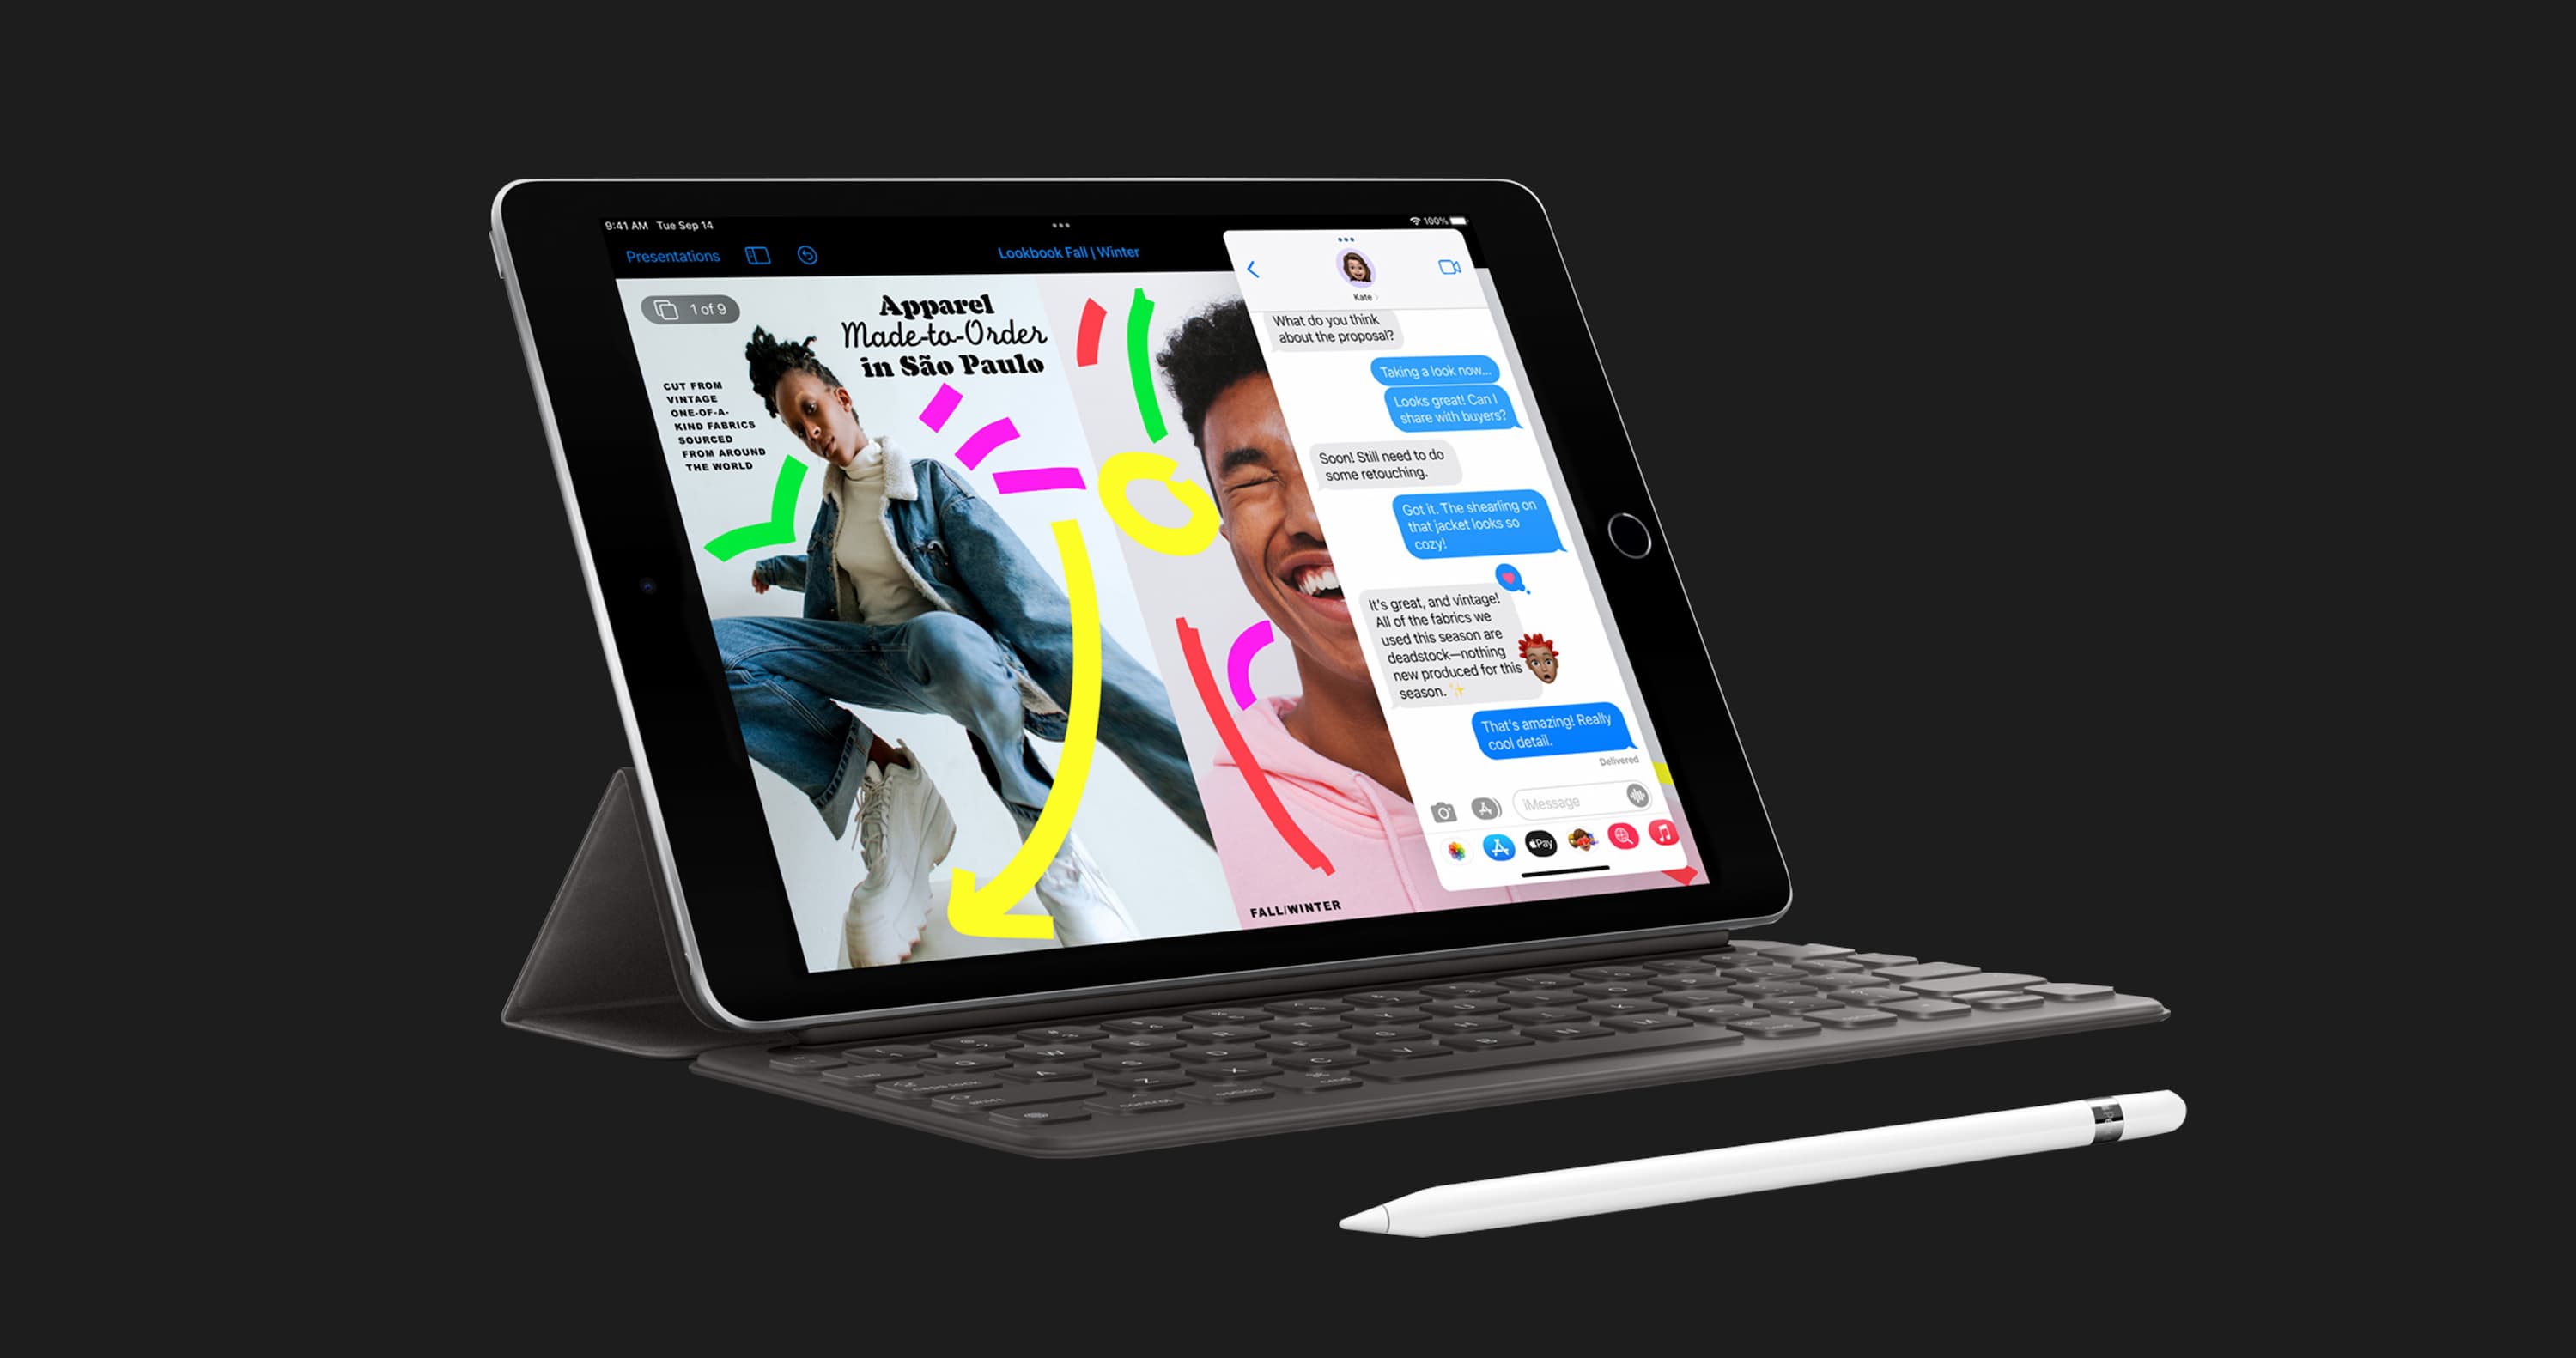 Планшет Apple iPad 10.2 64GB, Wi-Fi (Space Gray) 2021 (MK2K3)